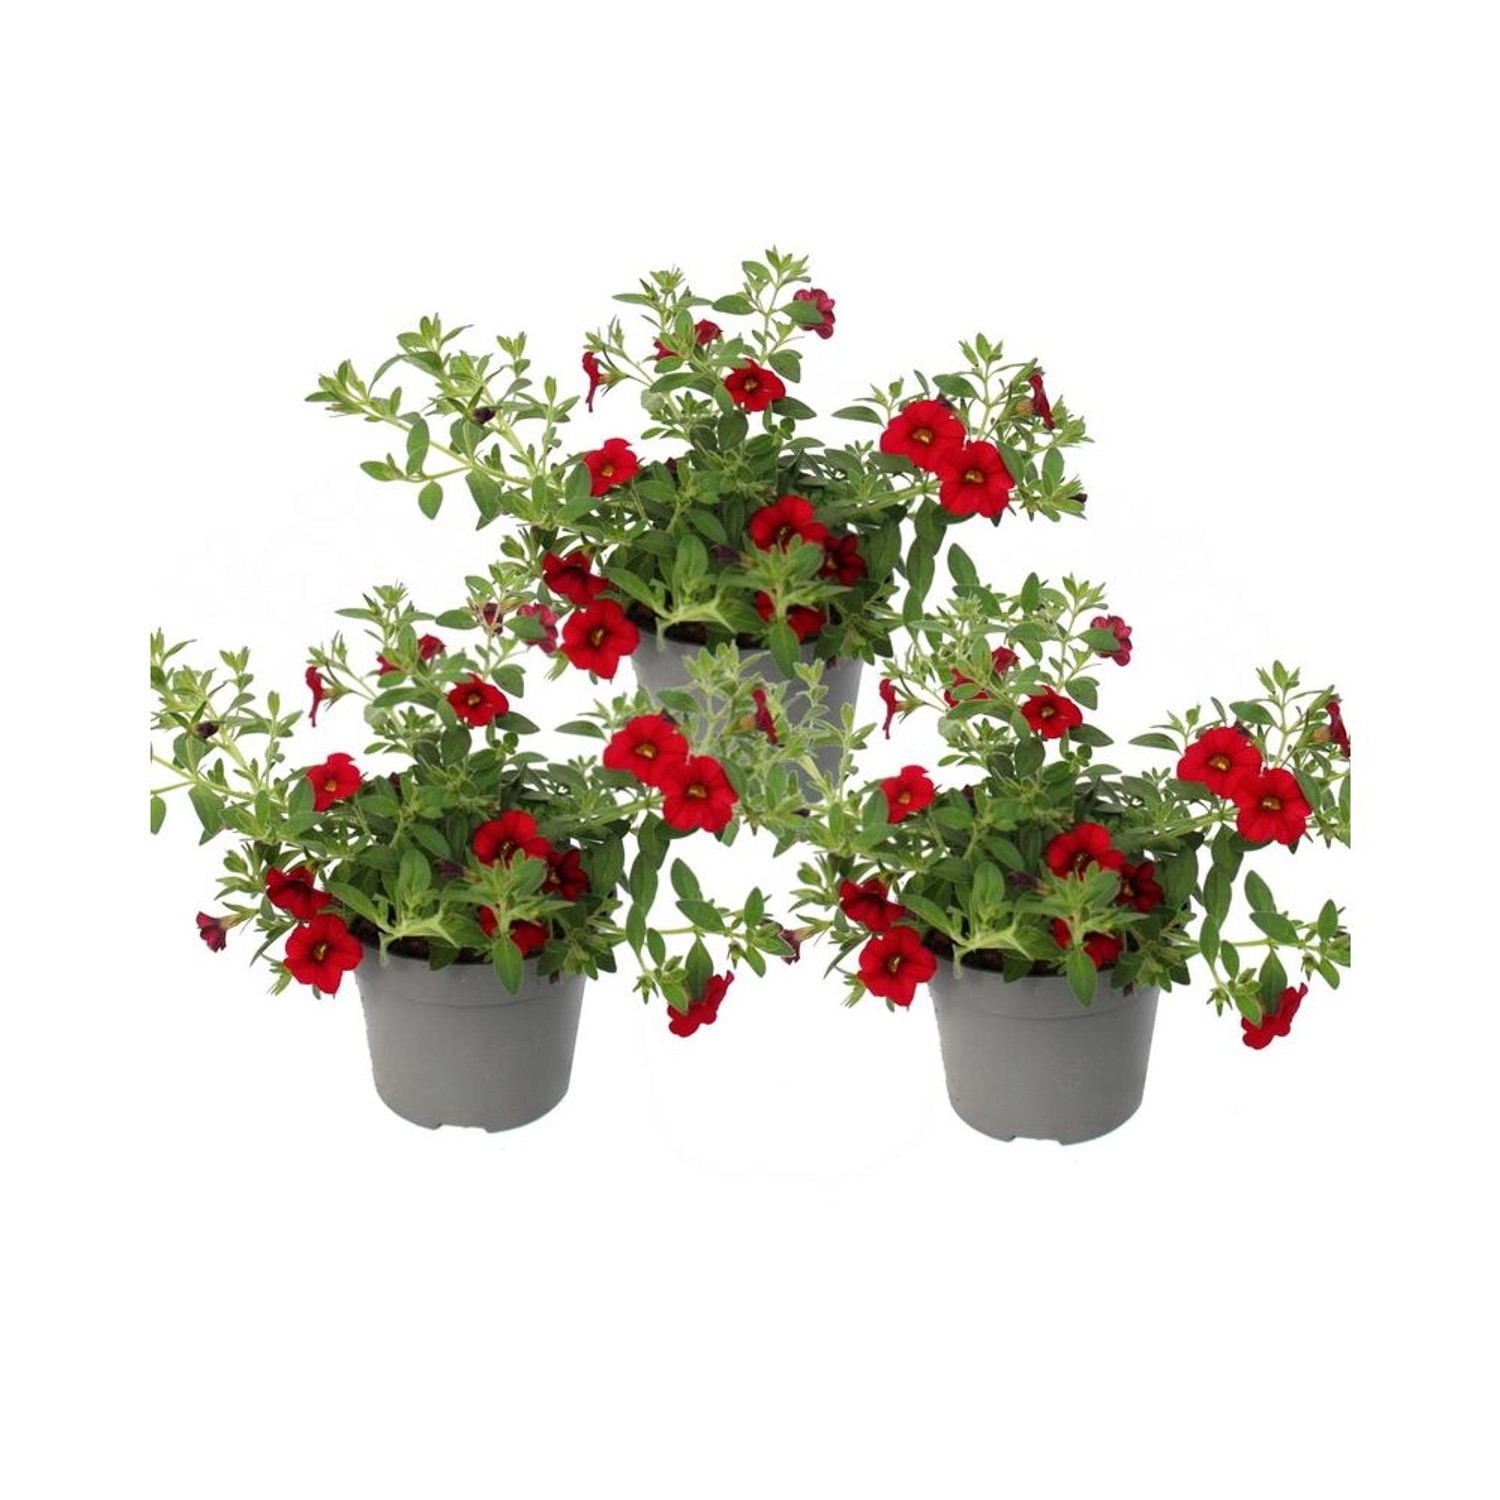 Exotenherz Zauberglöckchen Minihängepetunie Calibrachoa 12cm Topf Set mit 3 Pflanzen Rot